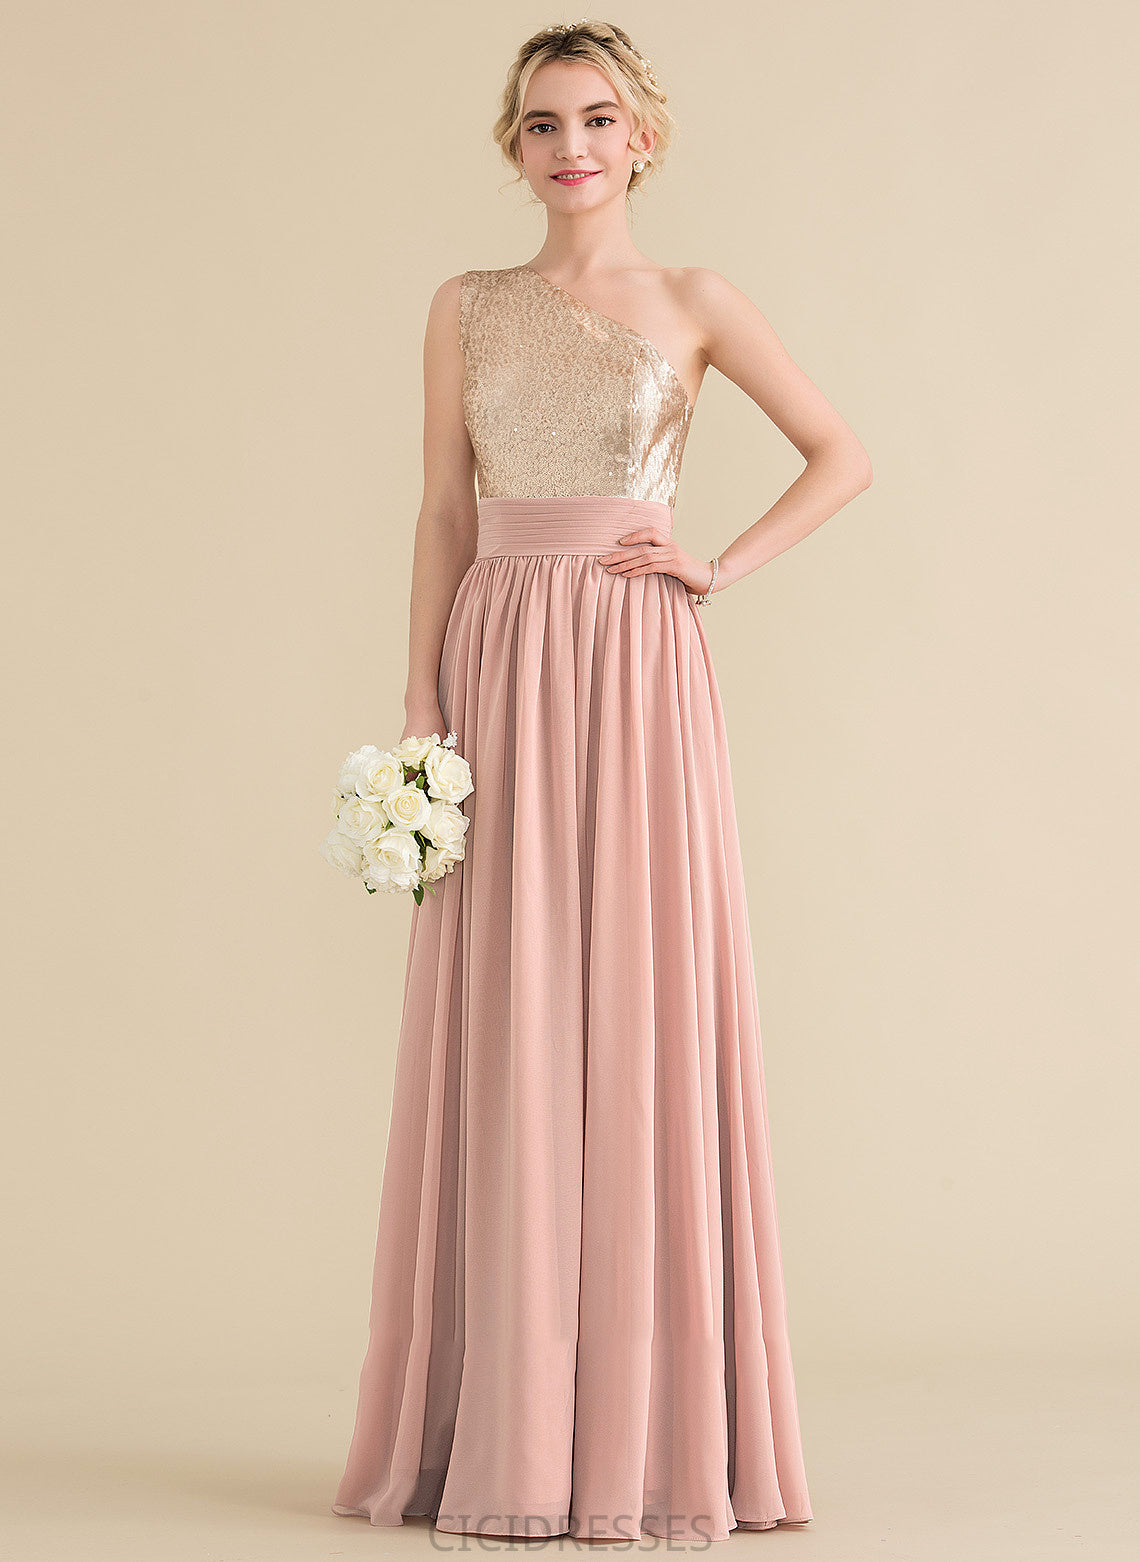 One-Shoulder Floor-Length A-Line Silhouette Length Sequined Neckline Straps Fabric Anna Sleeveless Scoop Bridesmaid Dresses